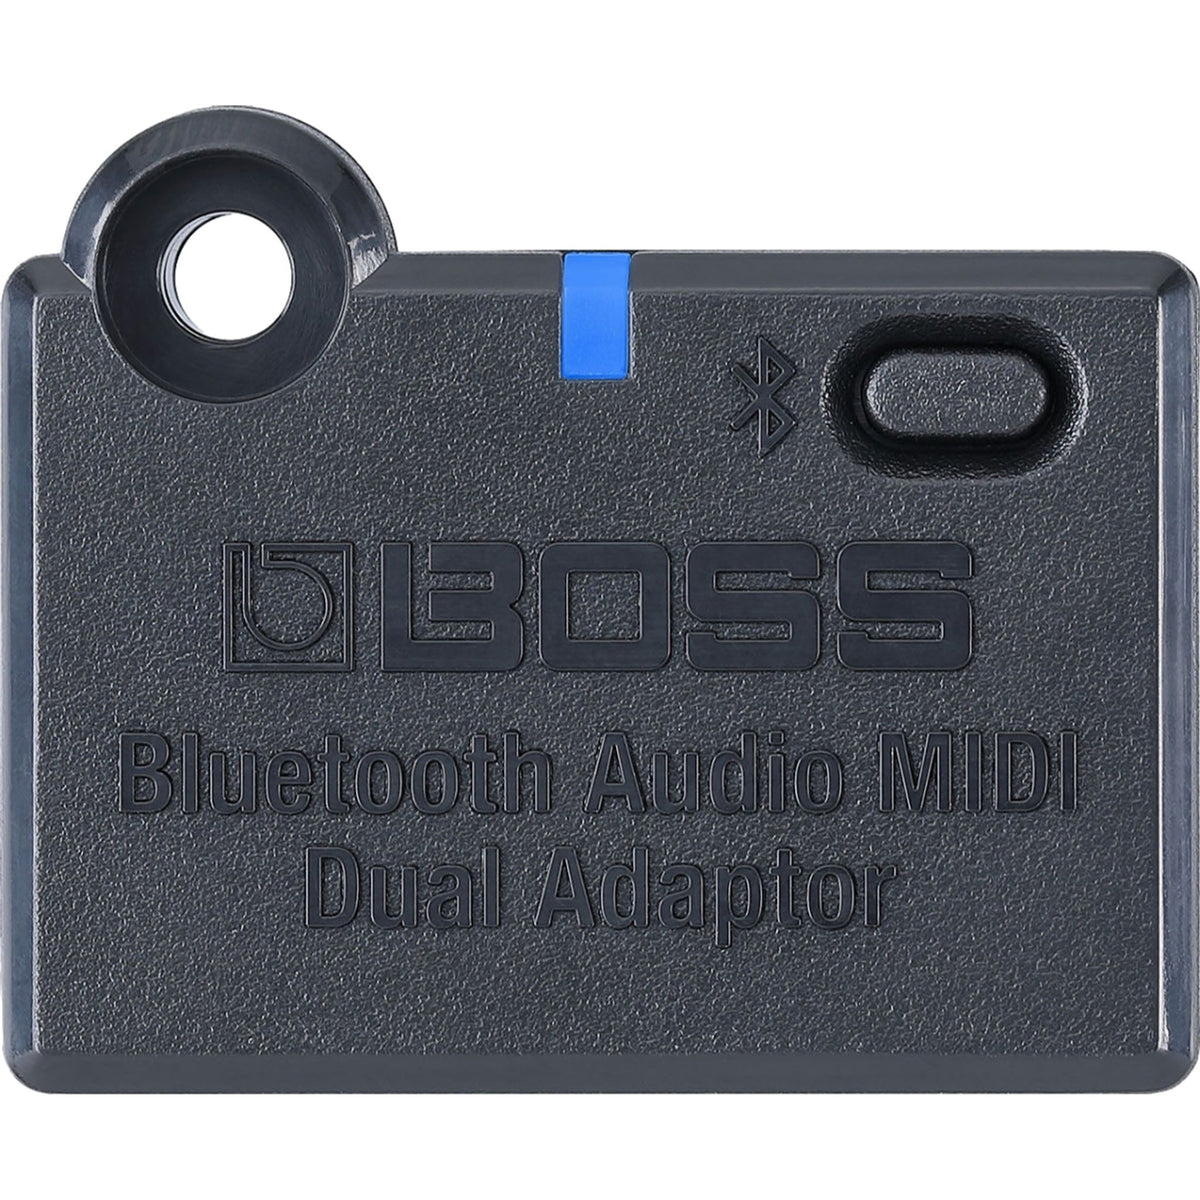 Boss Bluetooth Audio MIDI Adapter